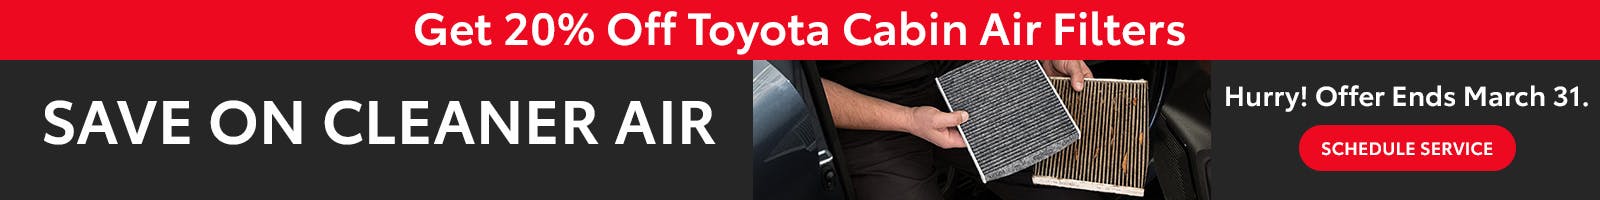 Air Filter Deal | Arlington Toyota